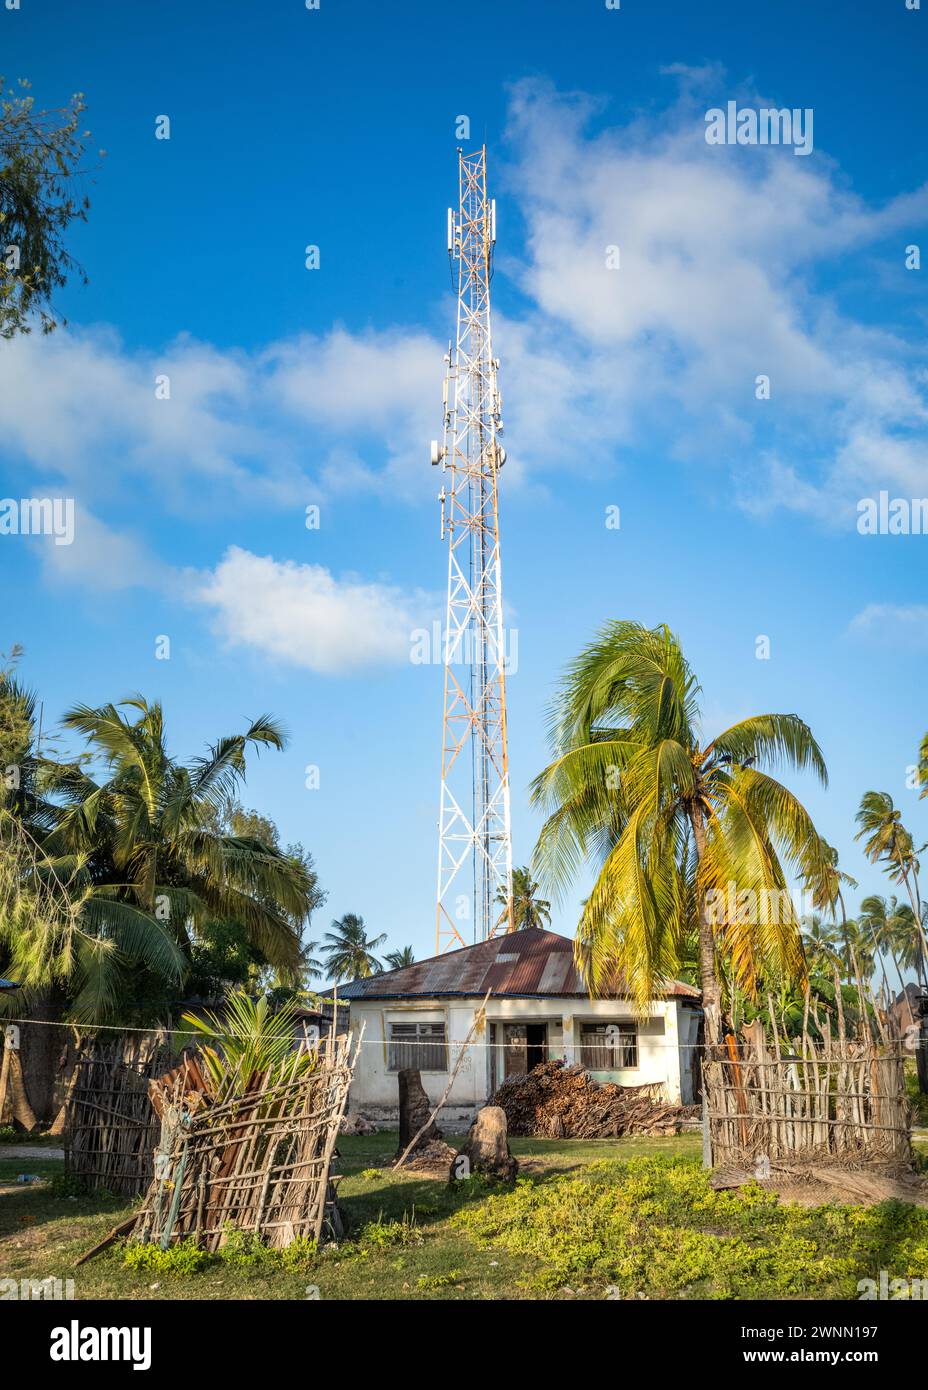 A small house with a radio and mobile phone mast behind it, Jambiani, Zanzibar, Tanzania Stock Photo